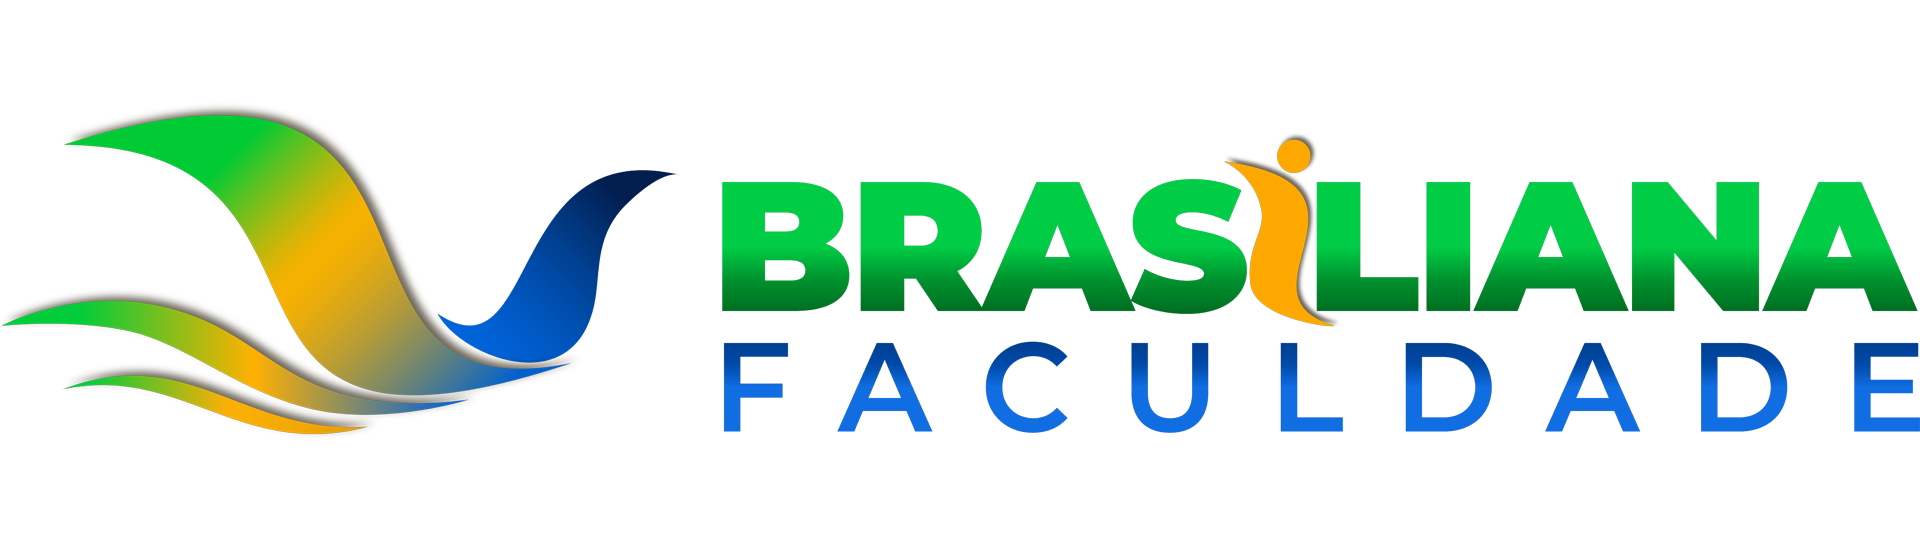 Faculdade Brasiliana